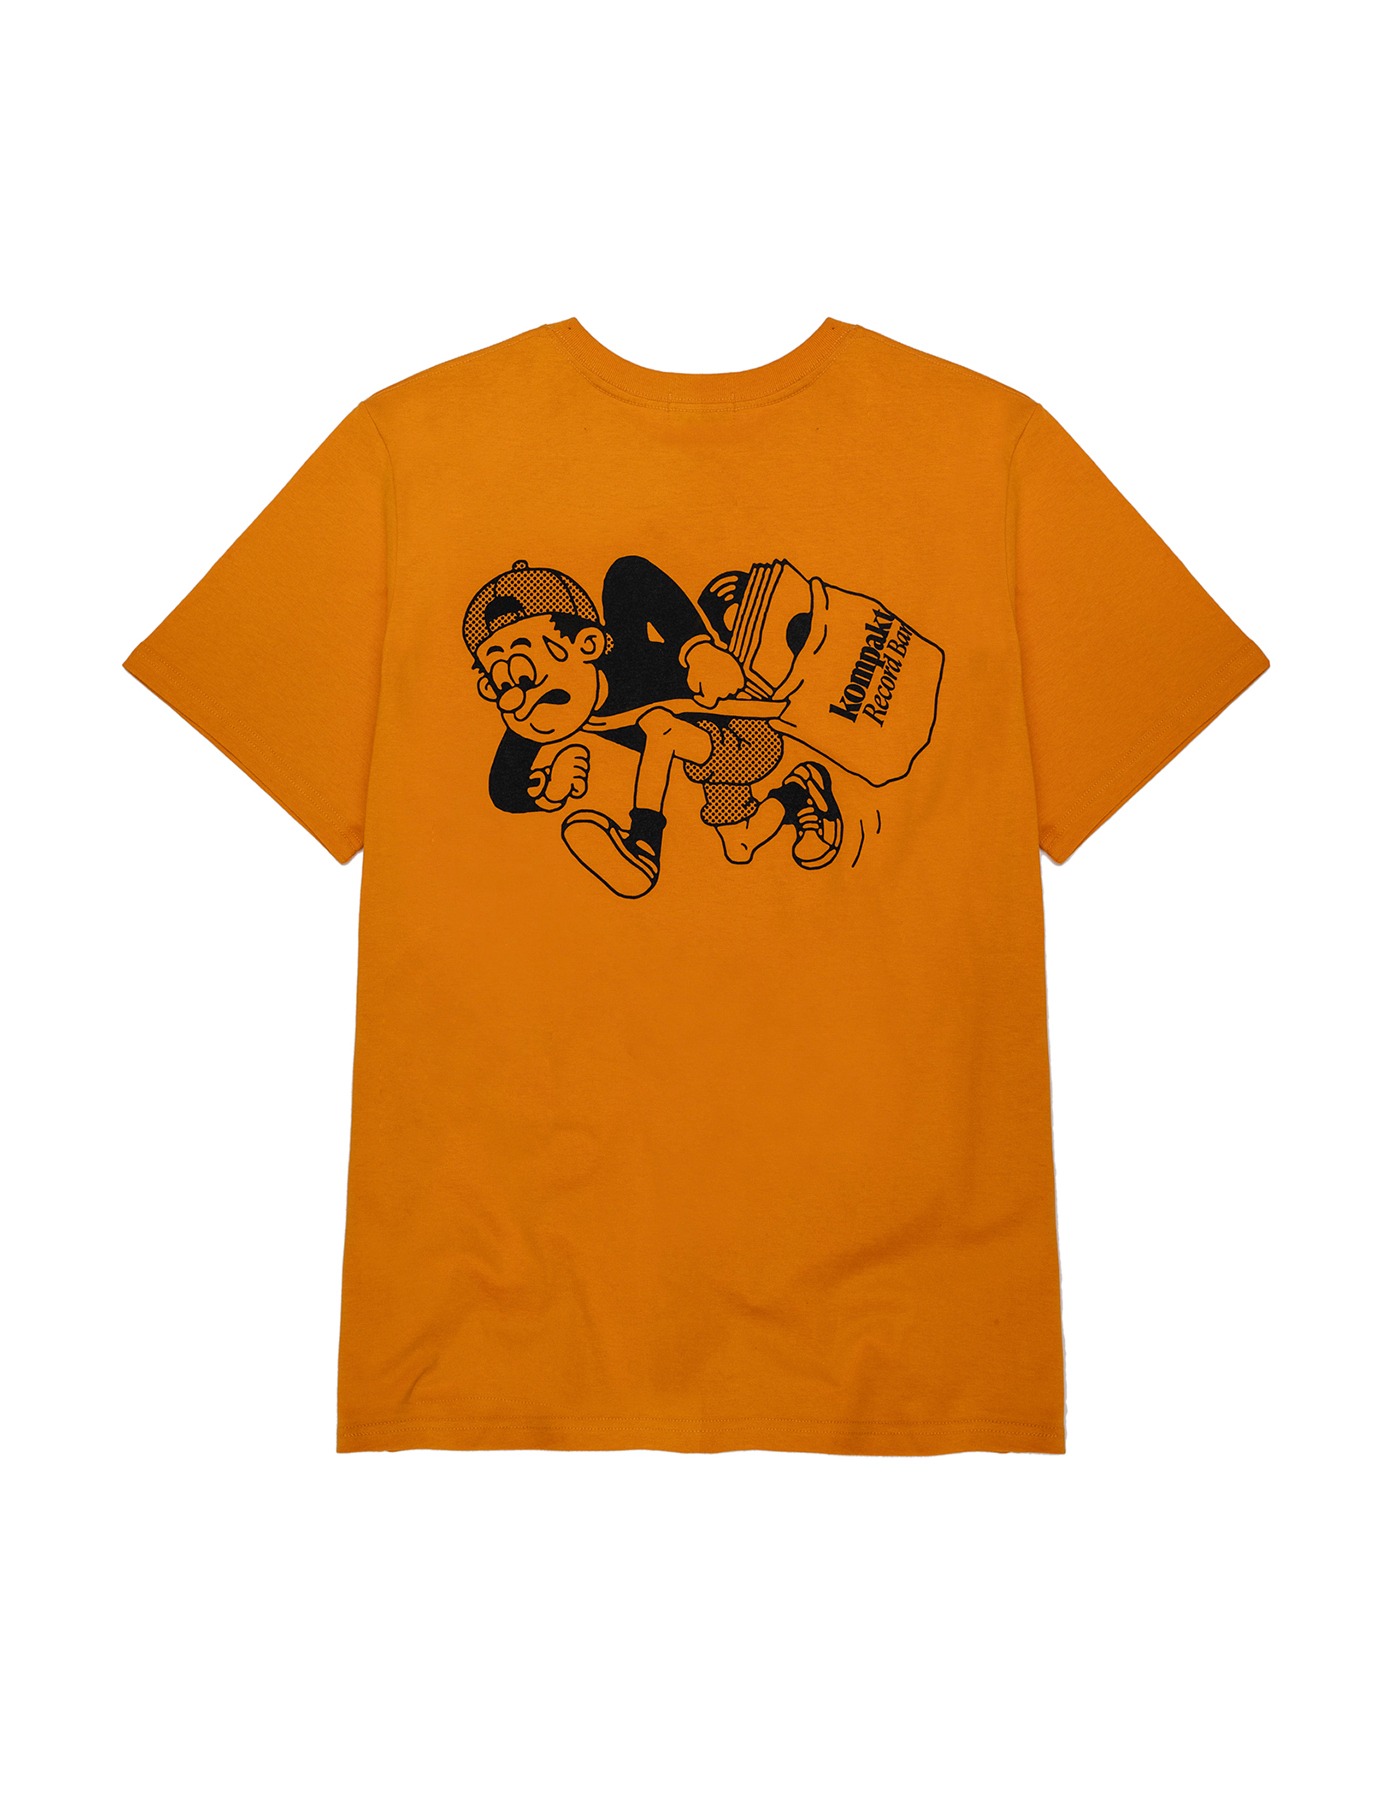 Do Not Be Late T-Shirt - Orange